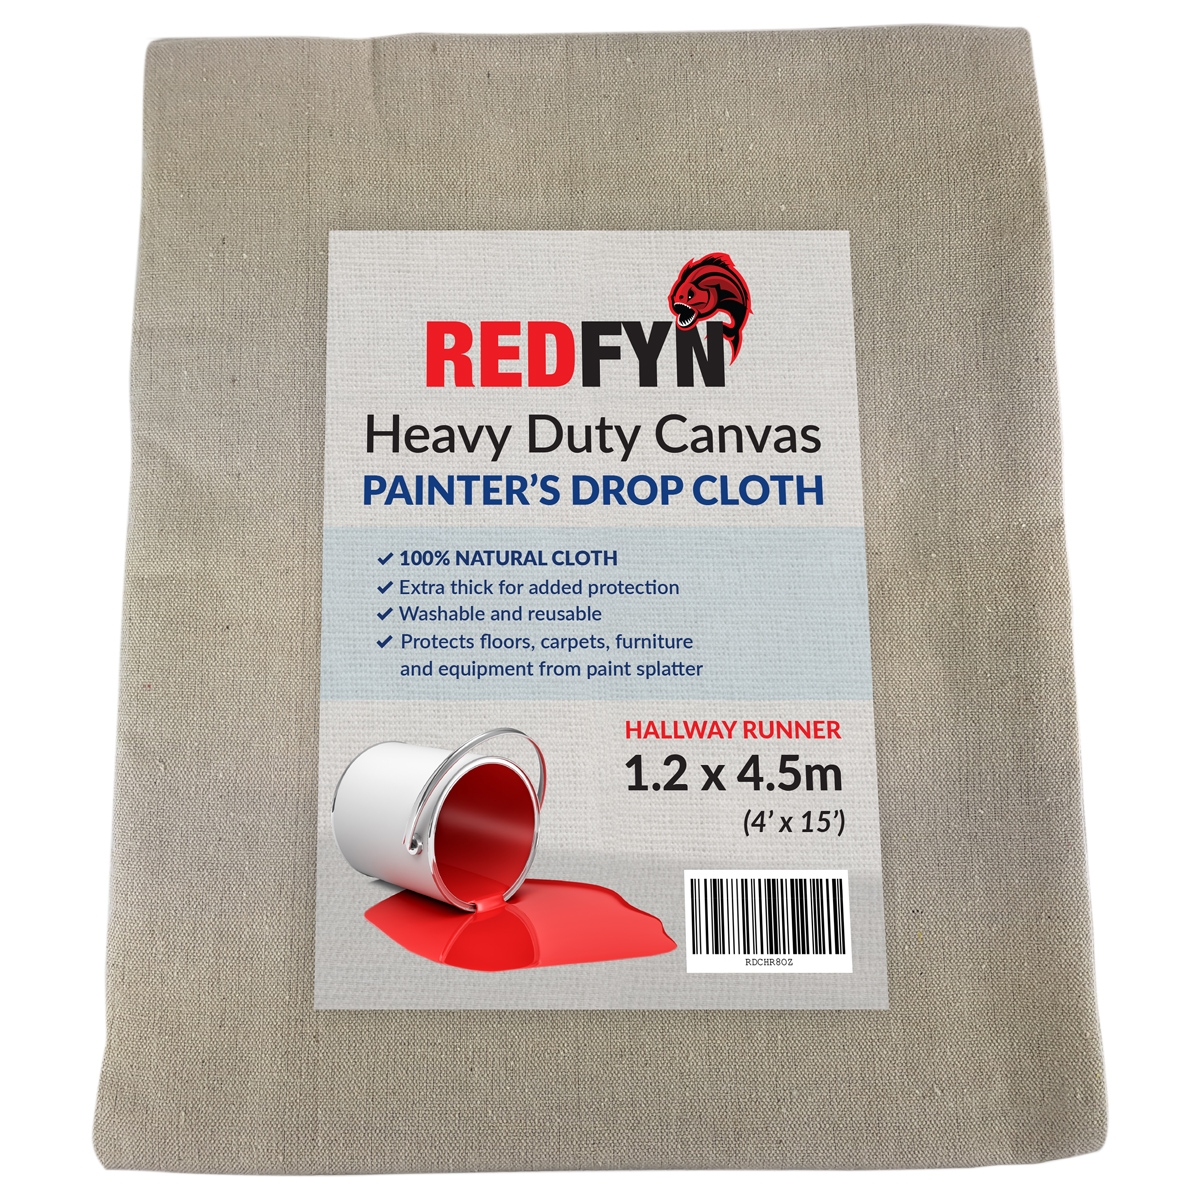 REDFYN Heavy Duty Painter's Canvas Drop Cloth Hallway Runner 15' x 4' (4.5m x 1.2m)